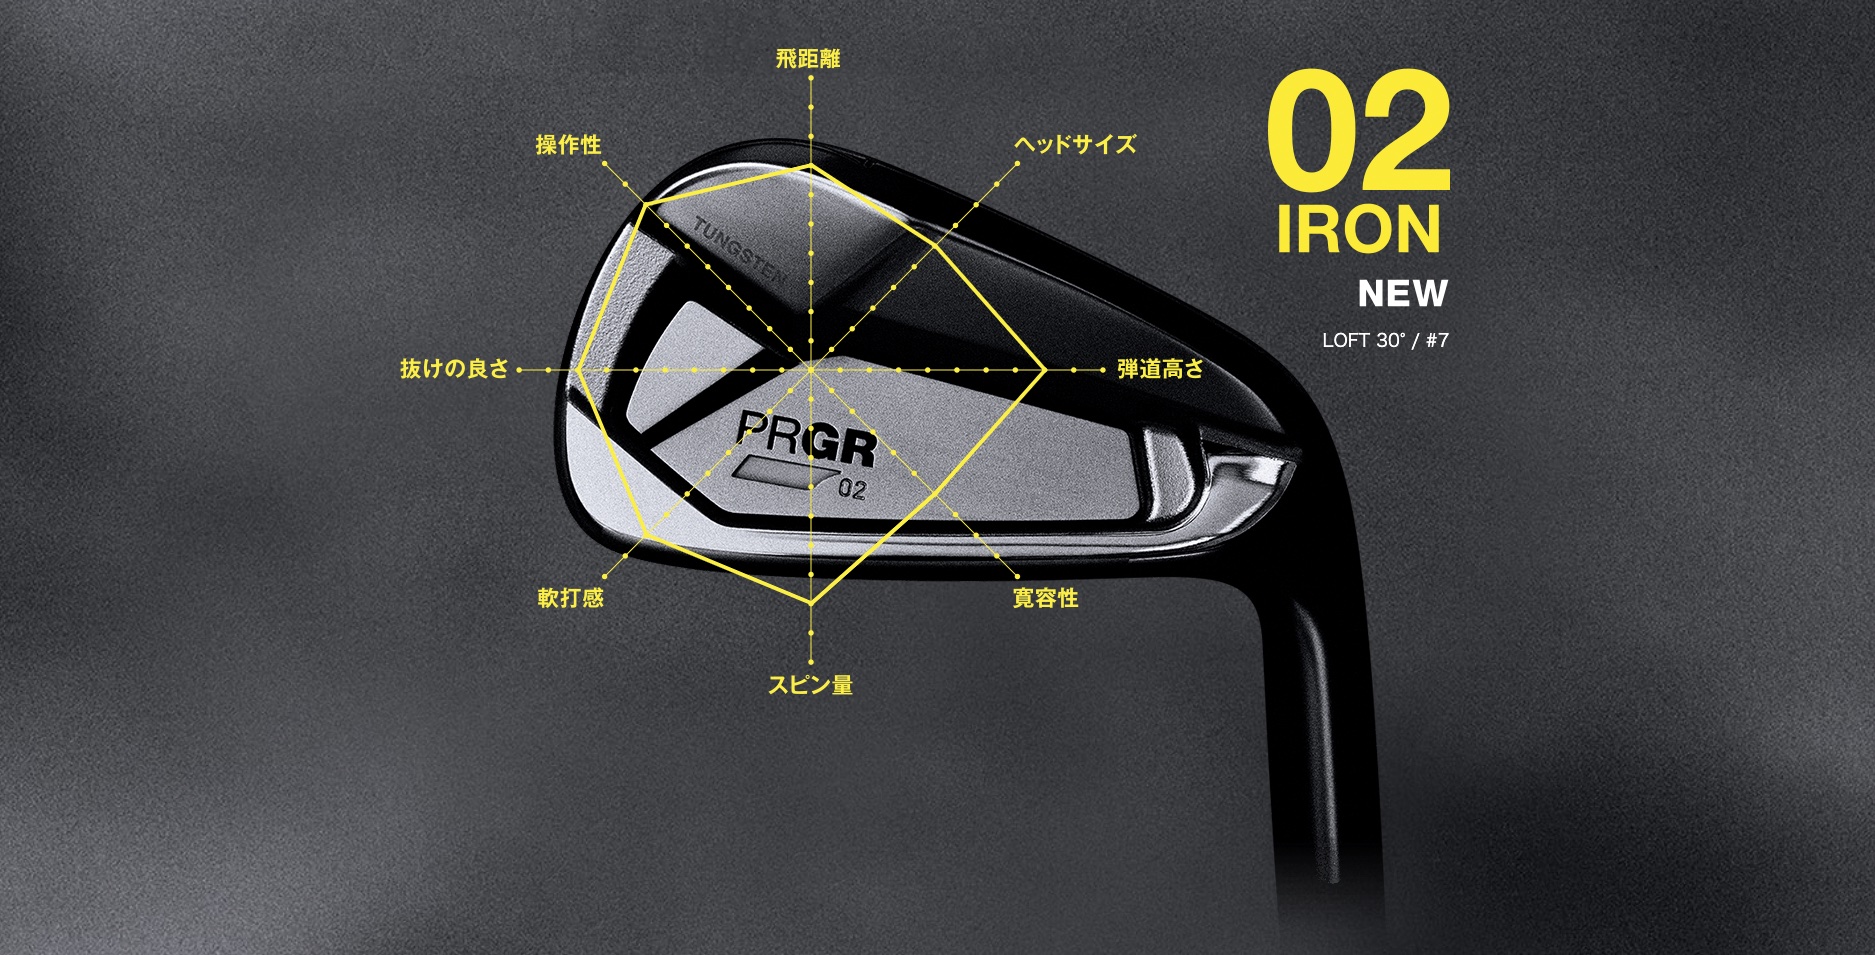 iron 02 new